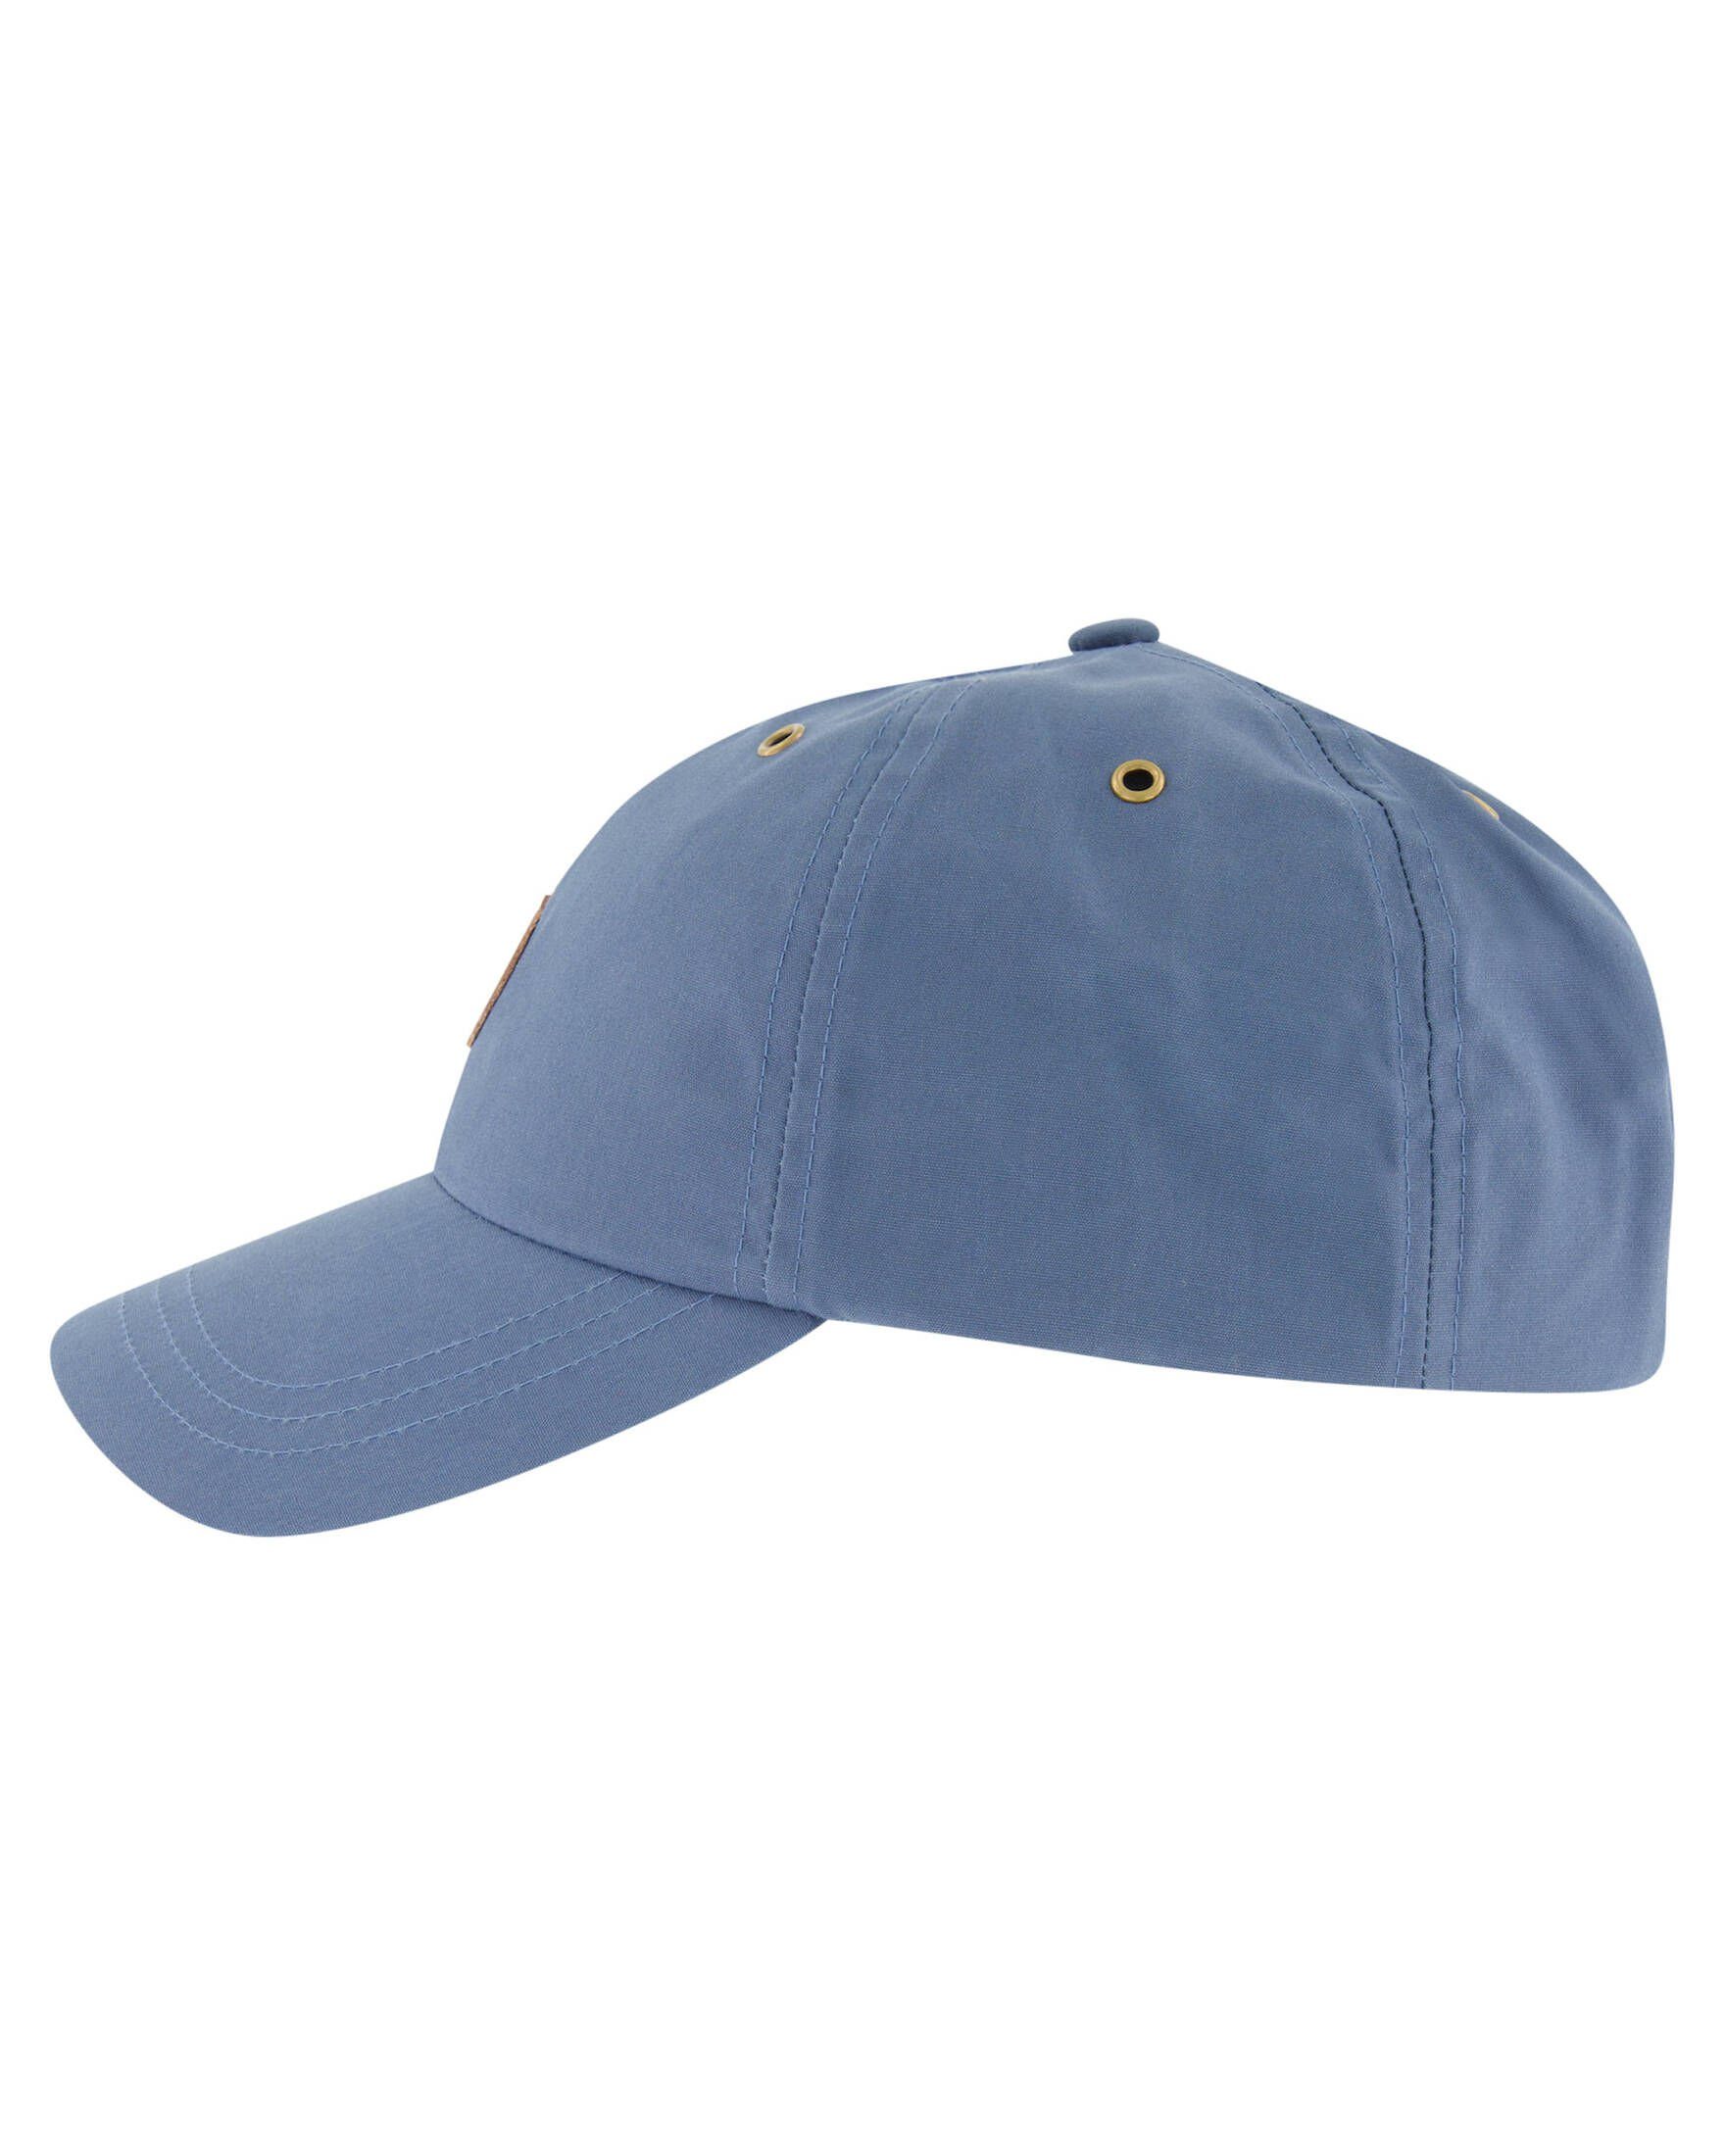 Baseball Cap" Fjällräven Cap (295) / Outdoor-Mütze dunkelblau "Helags Cap